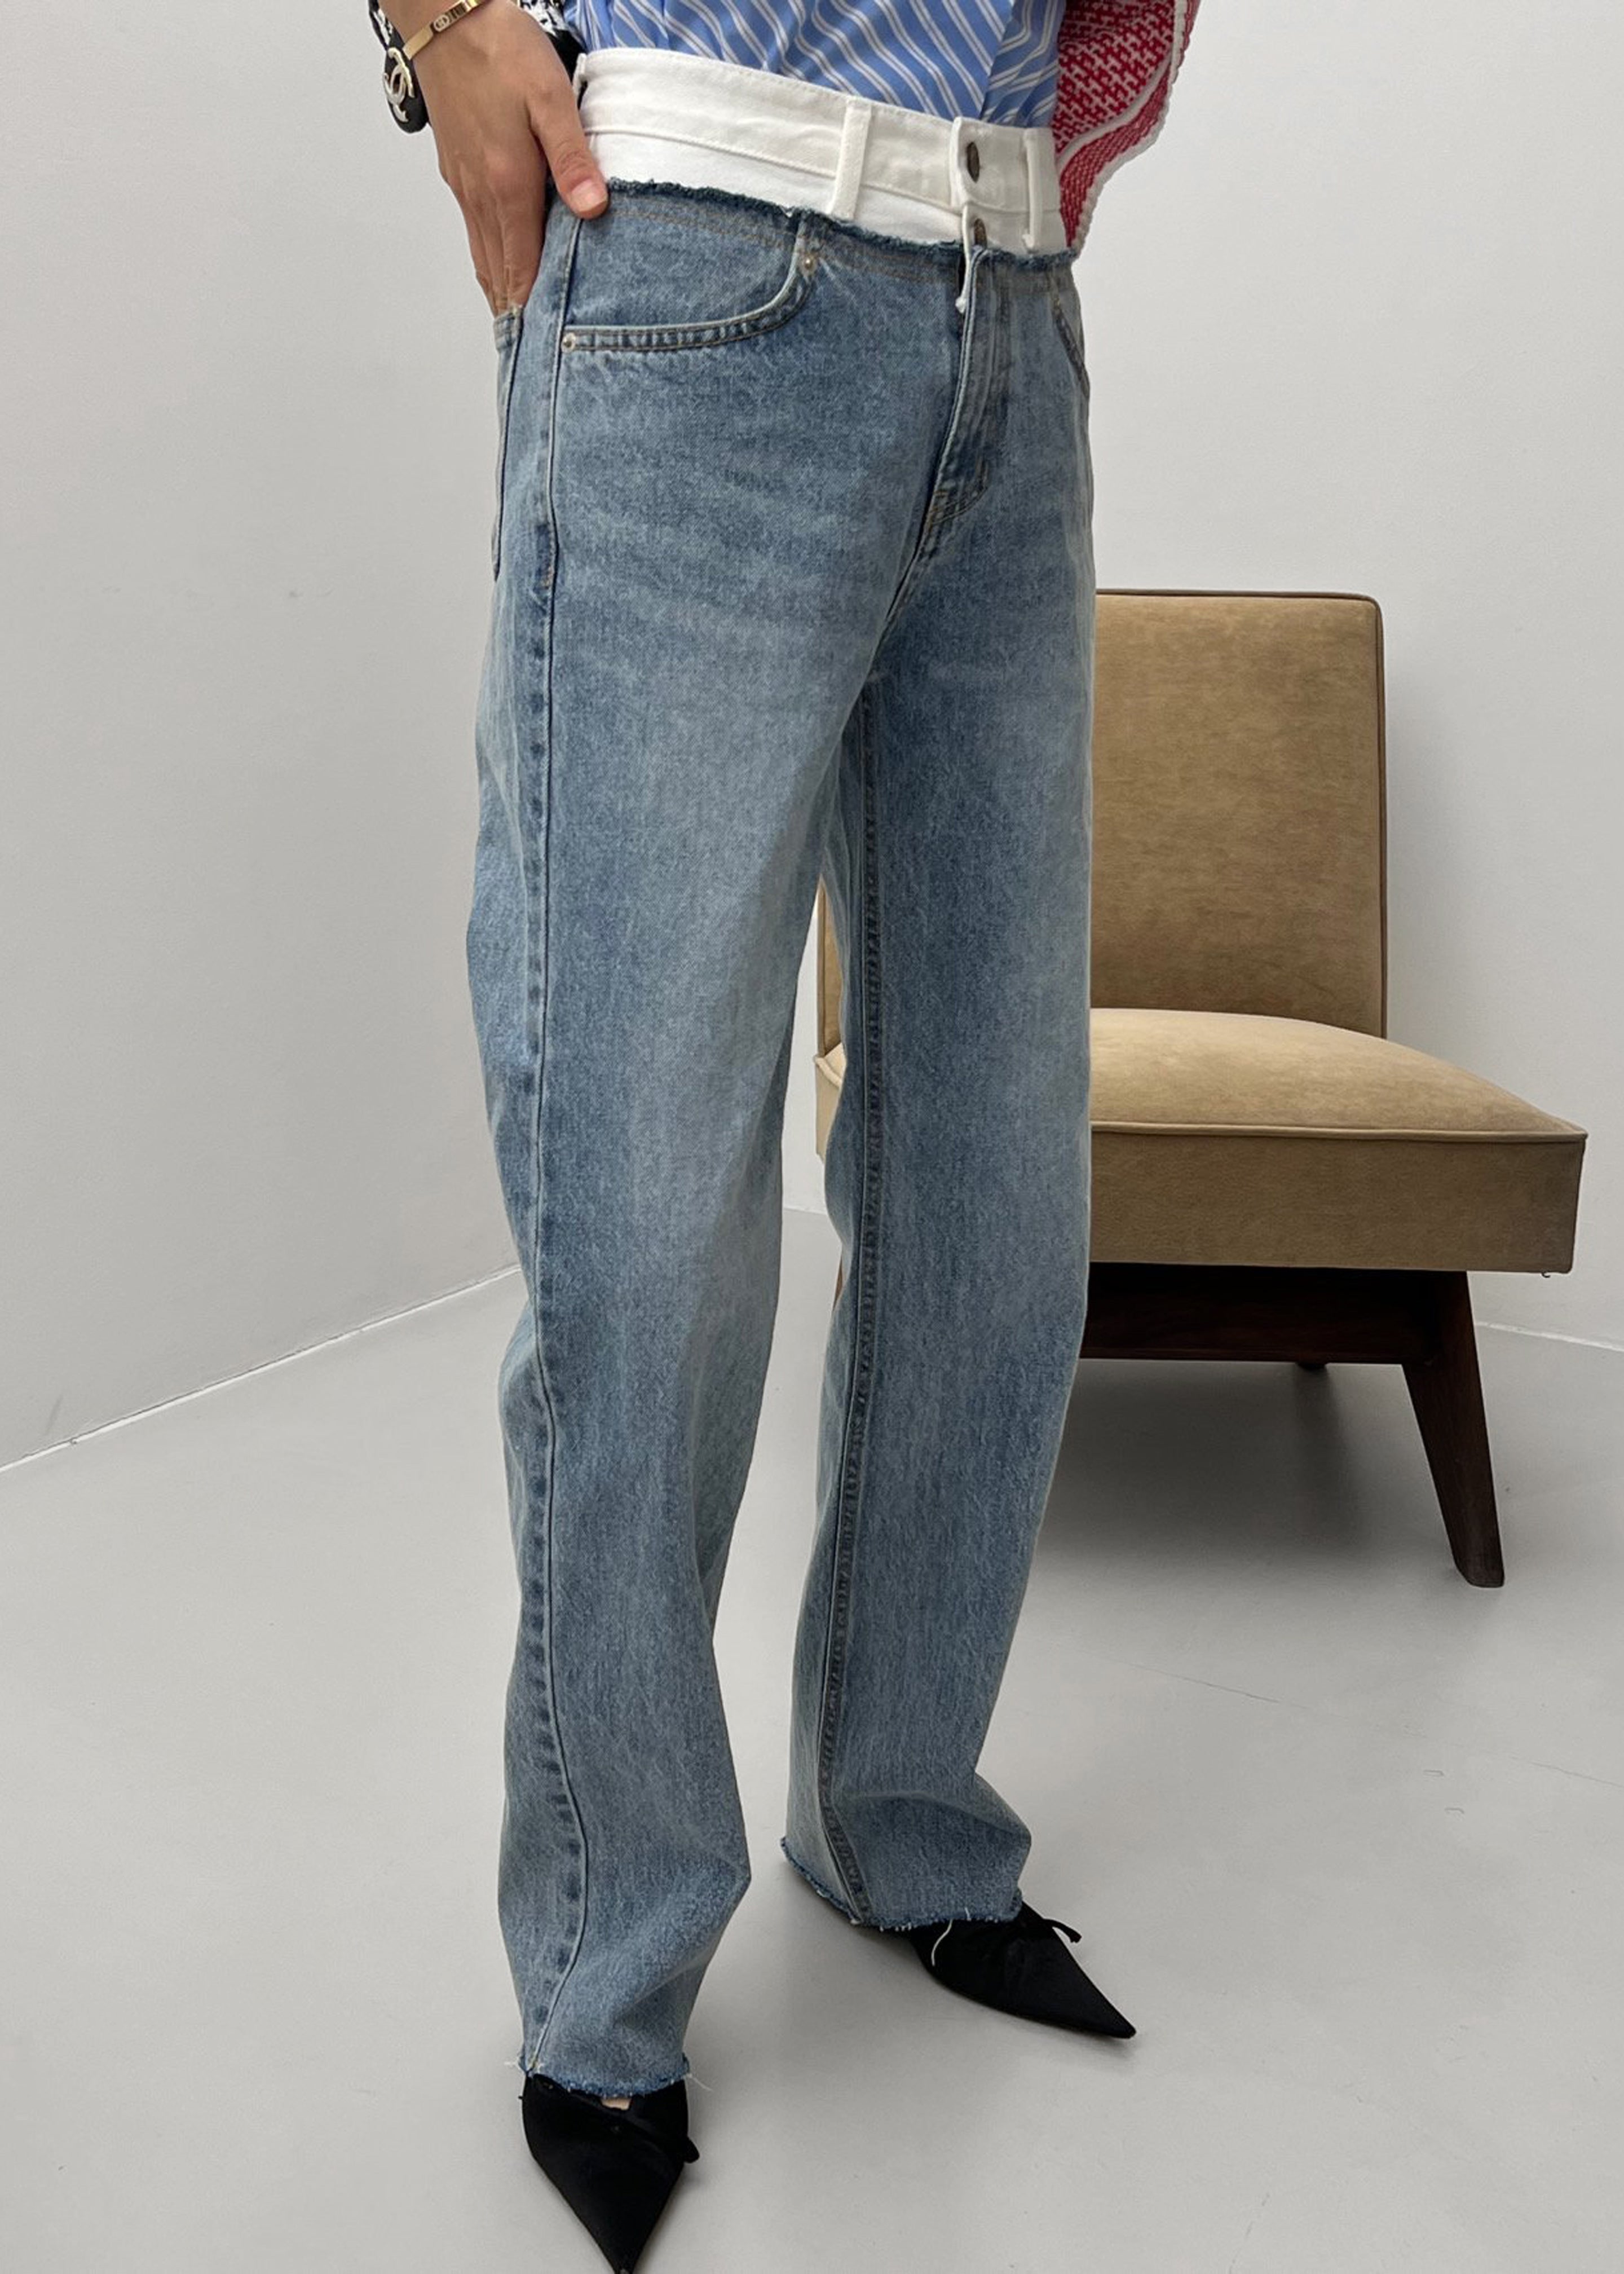 Elijah Contrast Jeans - White/Worn Wash - 1